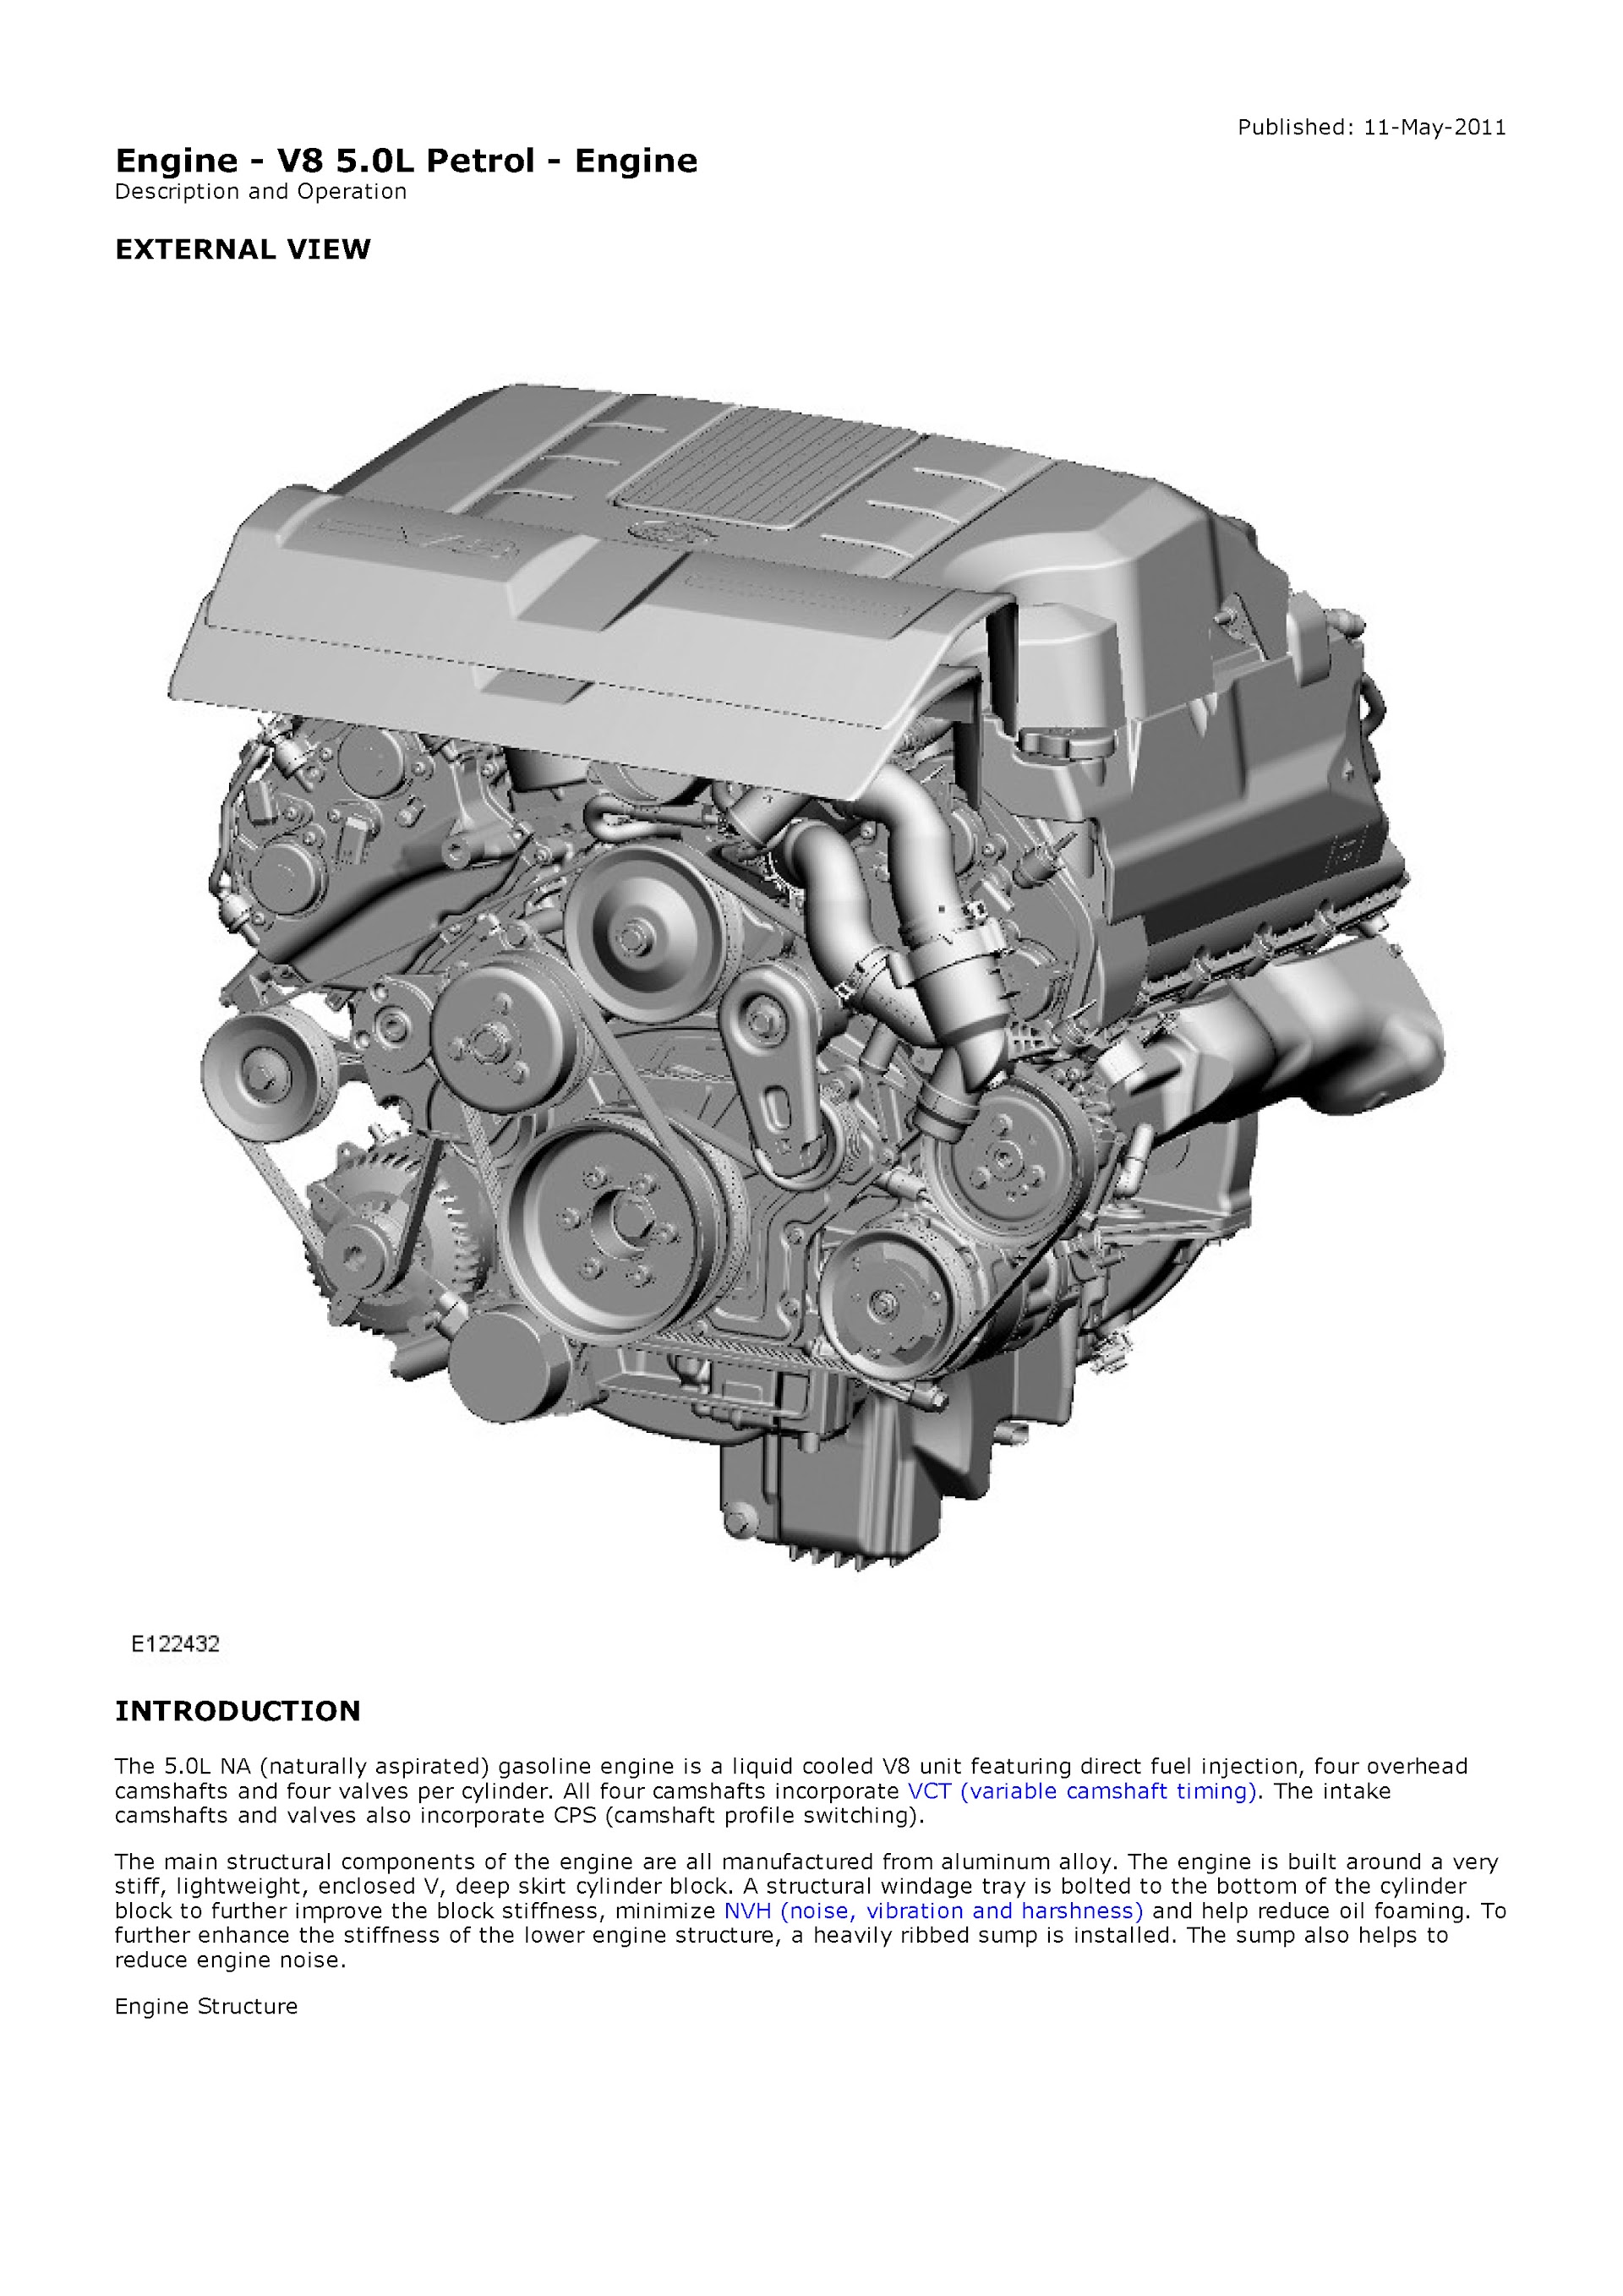 2009-2011 Land Rover Discovery 4 Repair Manual, Engine V8 5.0L Petrol